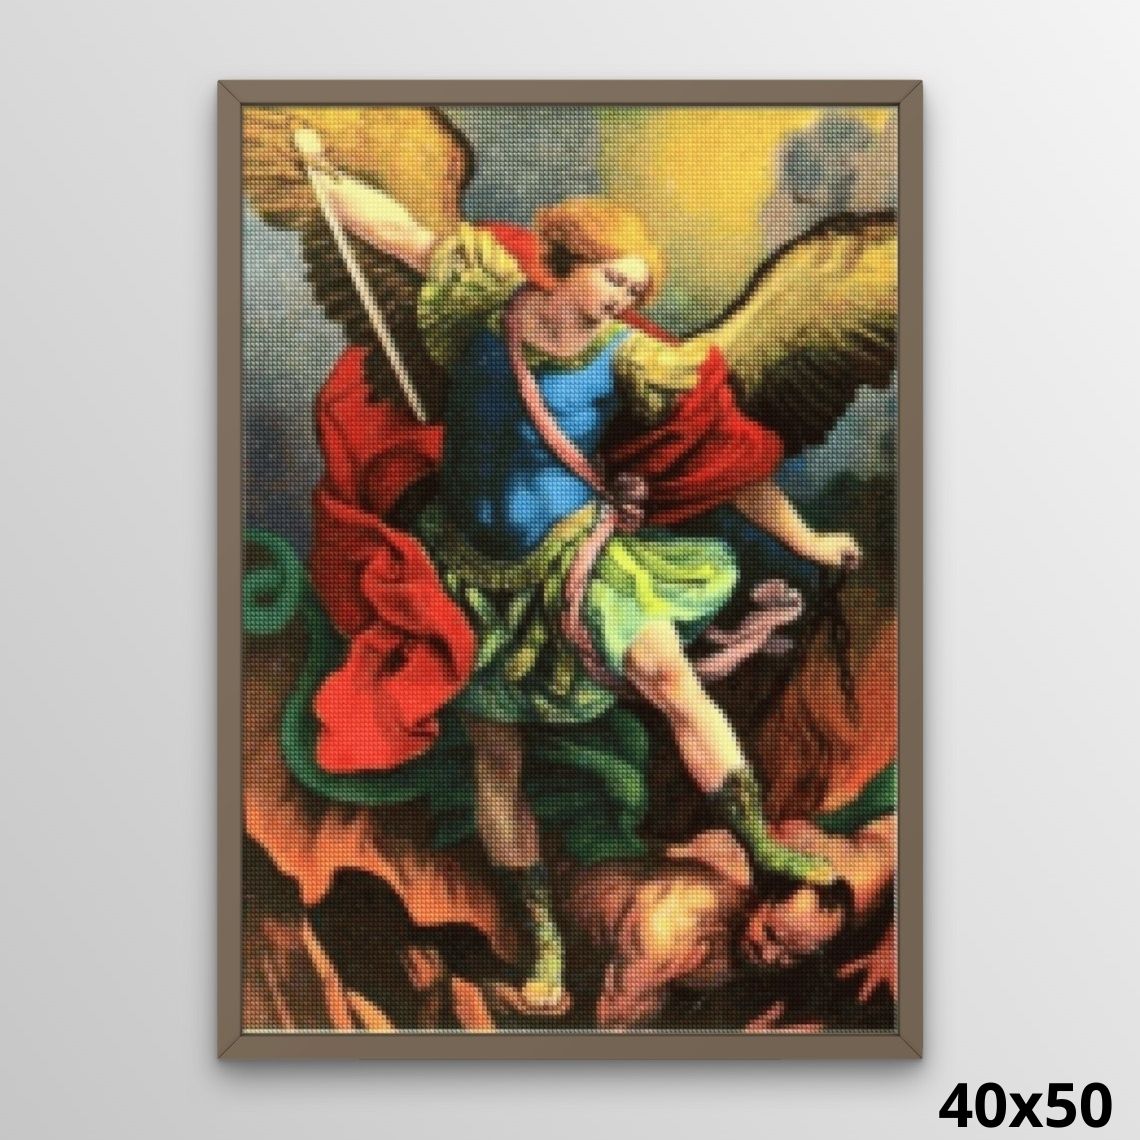 Archangel Michael 40x50 Diamond Painting